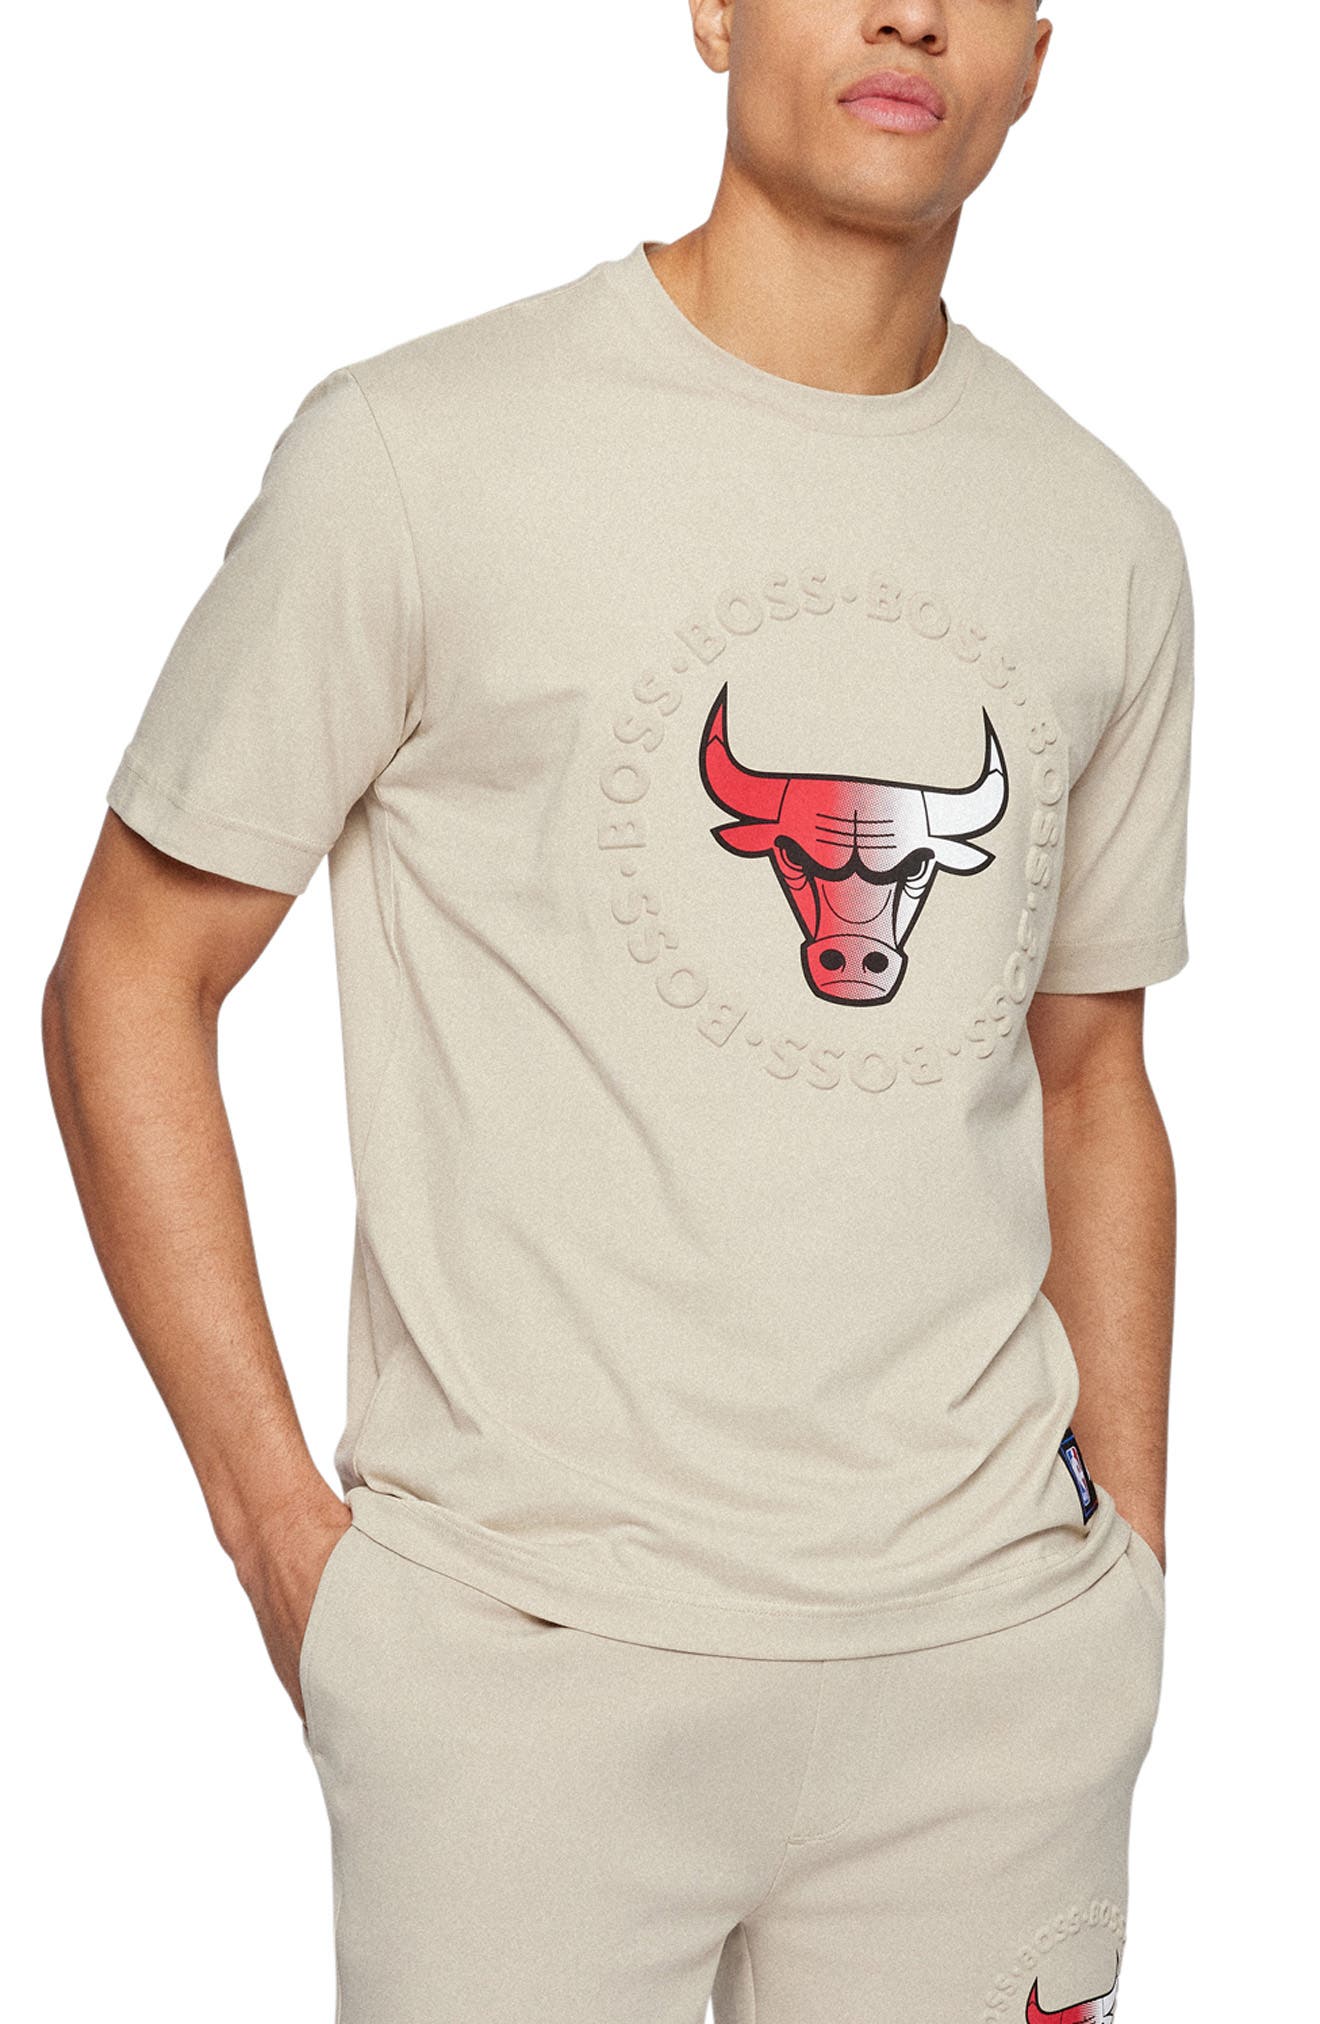 Boss x NBA Chicago Bulls Black Acrylic Virgin Wool Sweater